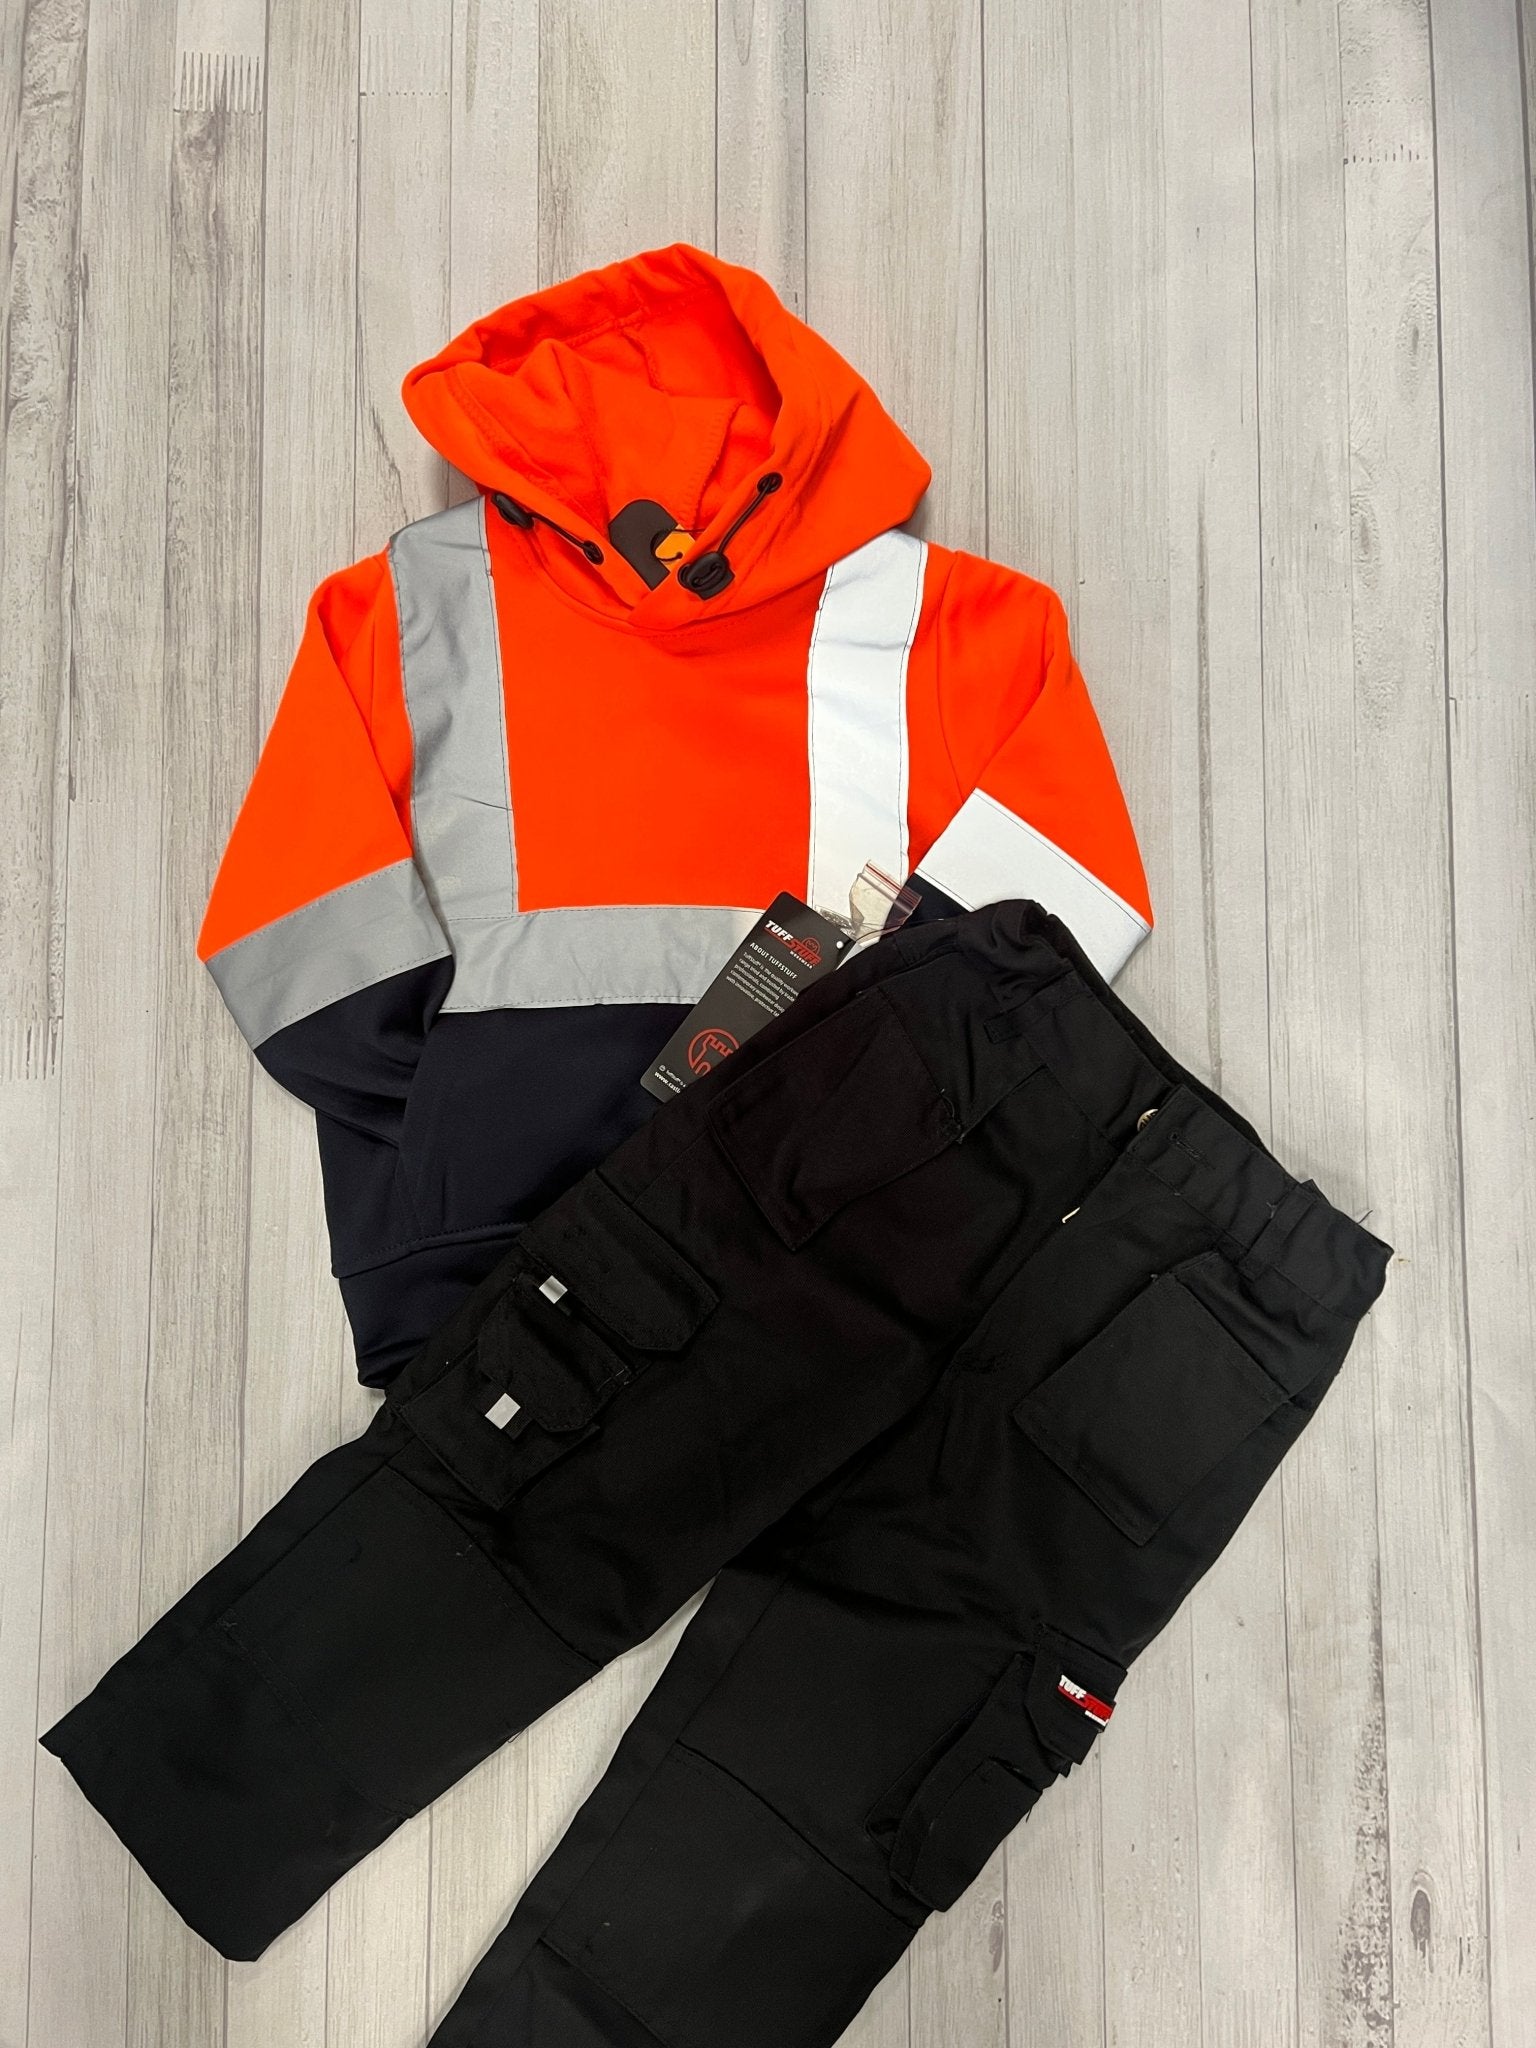 Kids Workwear bundle - Hi viz orange hoody + Black Trouser